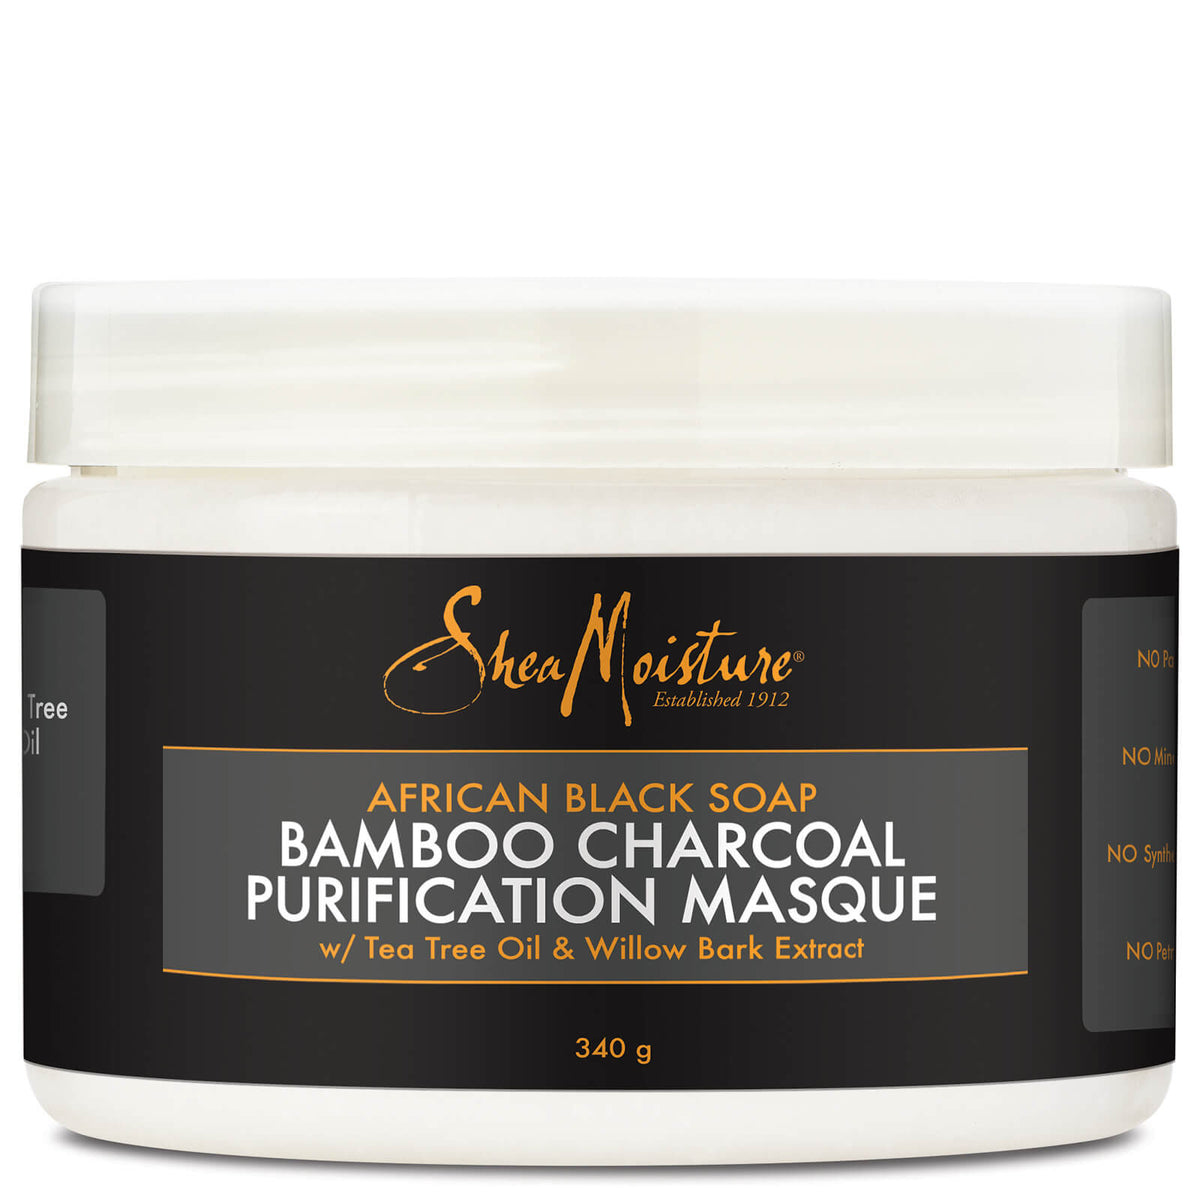 Shea Moisture - African Black Soap - Bamboo Charcoal Purification Masque